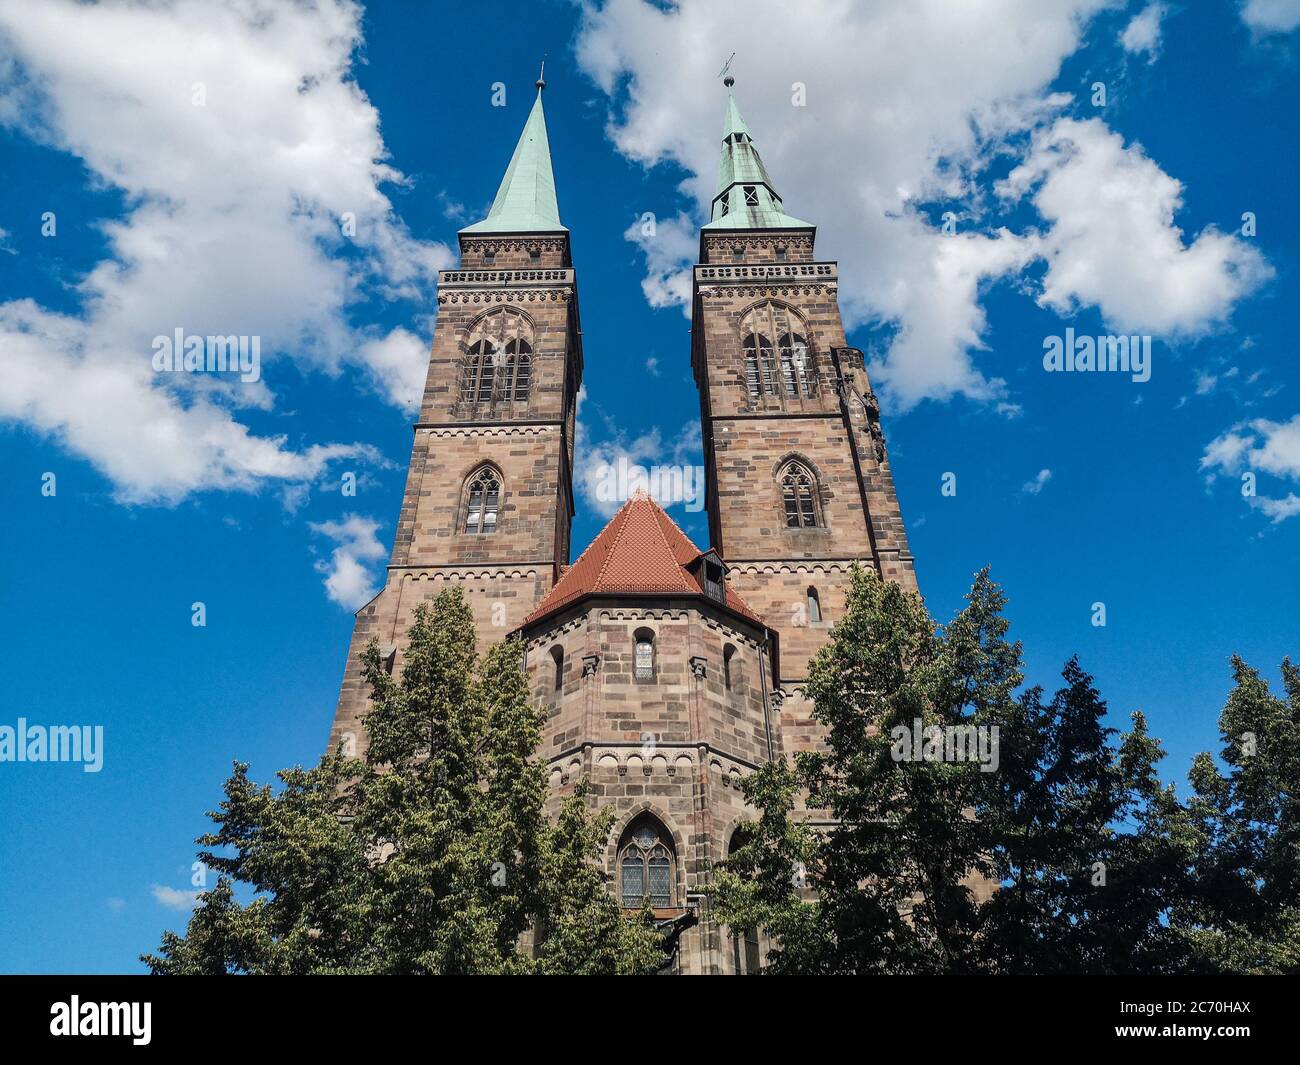 Nürnberg, deutschland - 4. juni 2020: Berühmte St. Sebaldus Kirchenfassade in nürnberg, deutschland, über tiefblauem Himmel Stockfoto